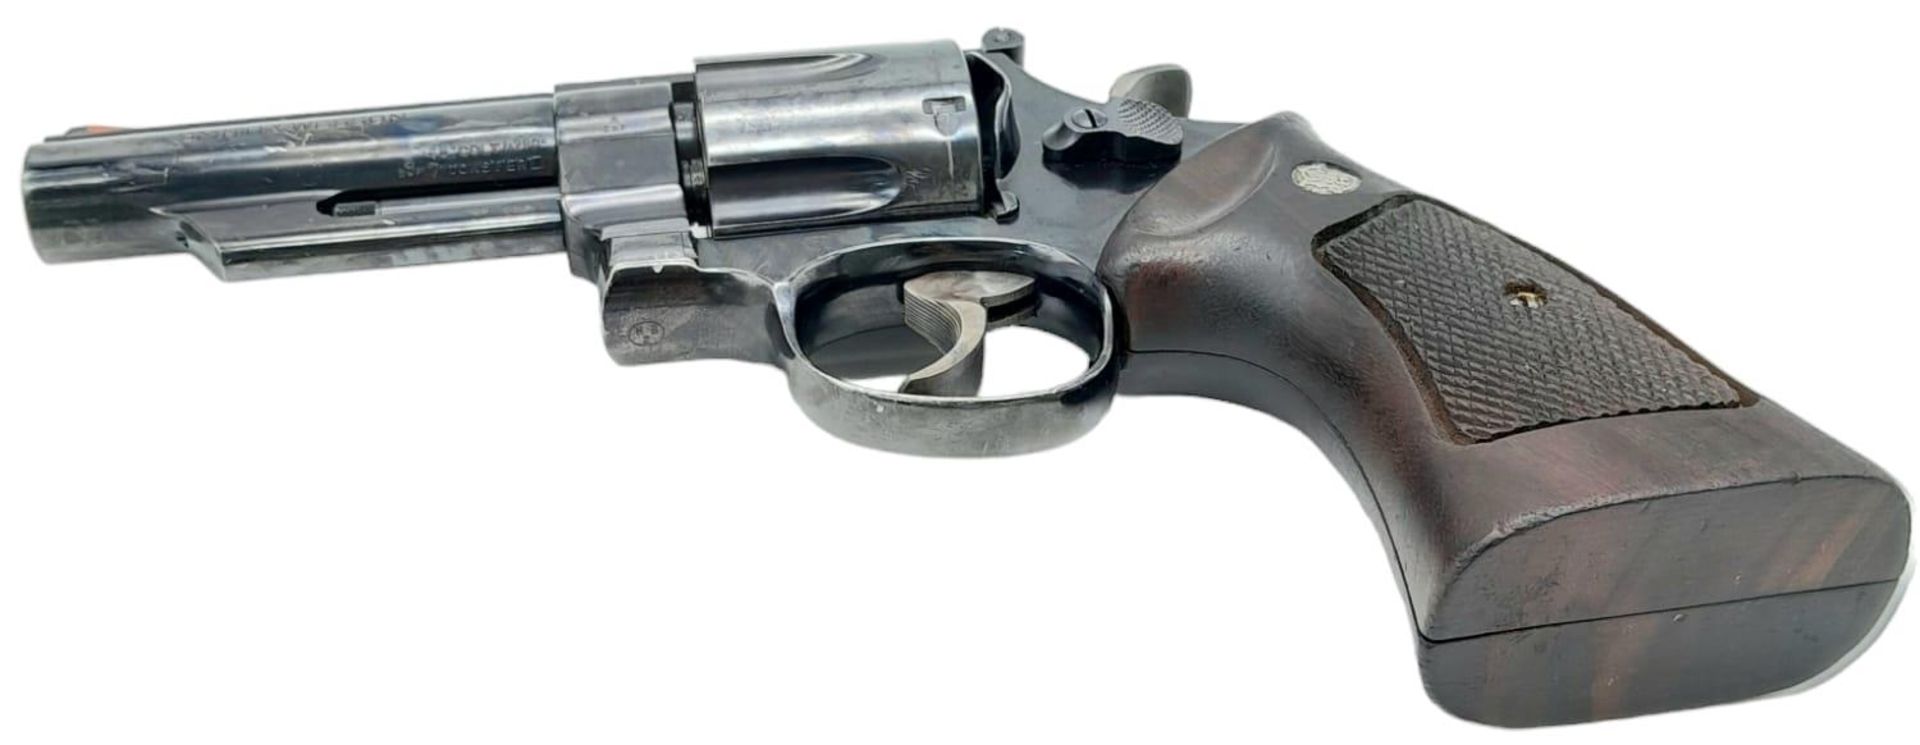 A Smith and Wesson .45 Calibre Revolver. This USA made pistol has a 4 inch barrel with a nice dark - Bild 5 aus 17